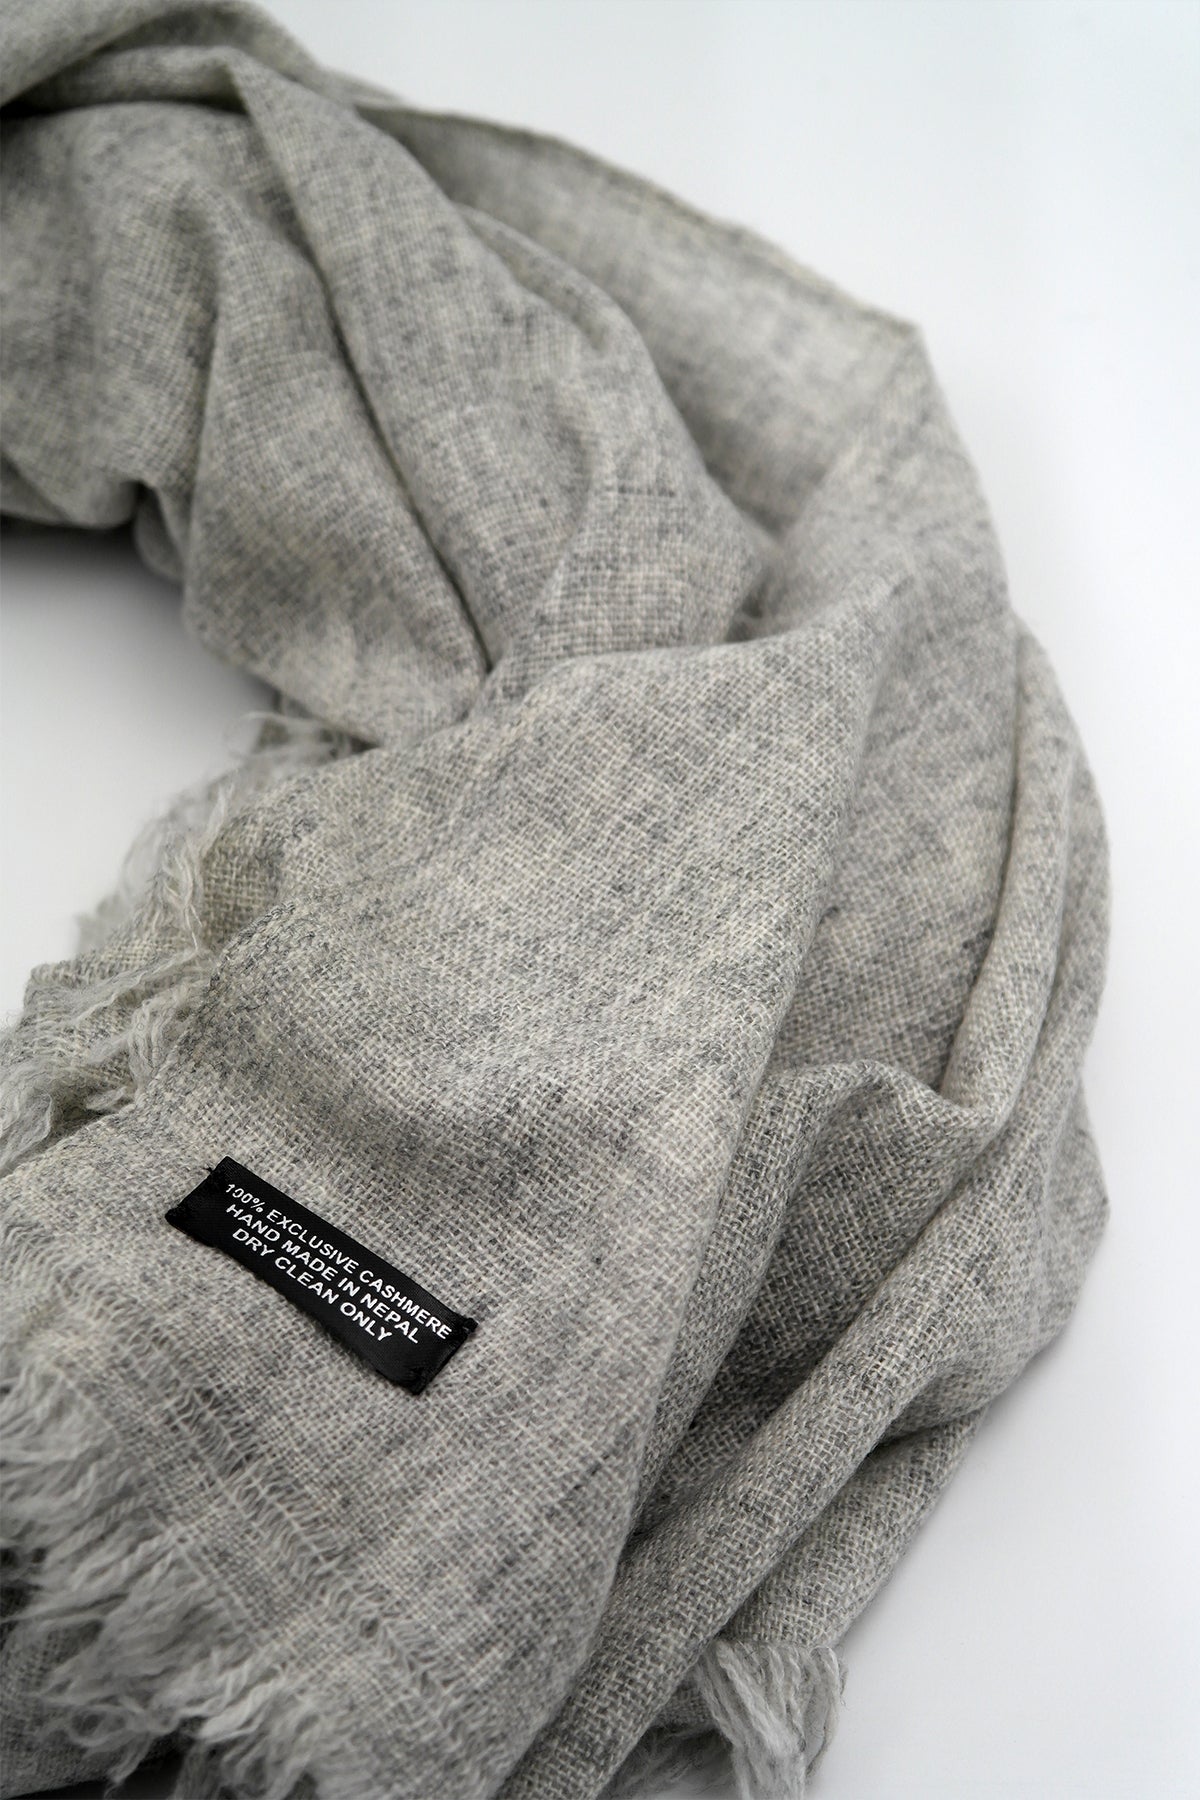 Cashmere Pashmina Shawl Handwoven Nepal wrap Knit Woven scarf Light grey